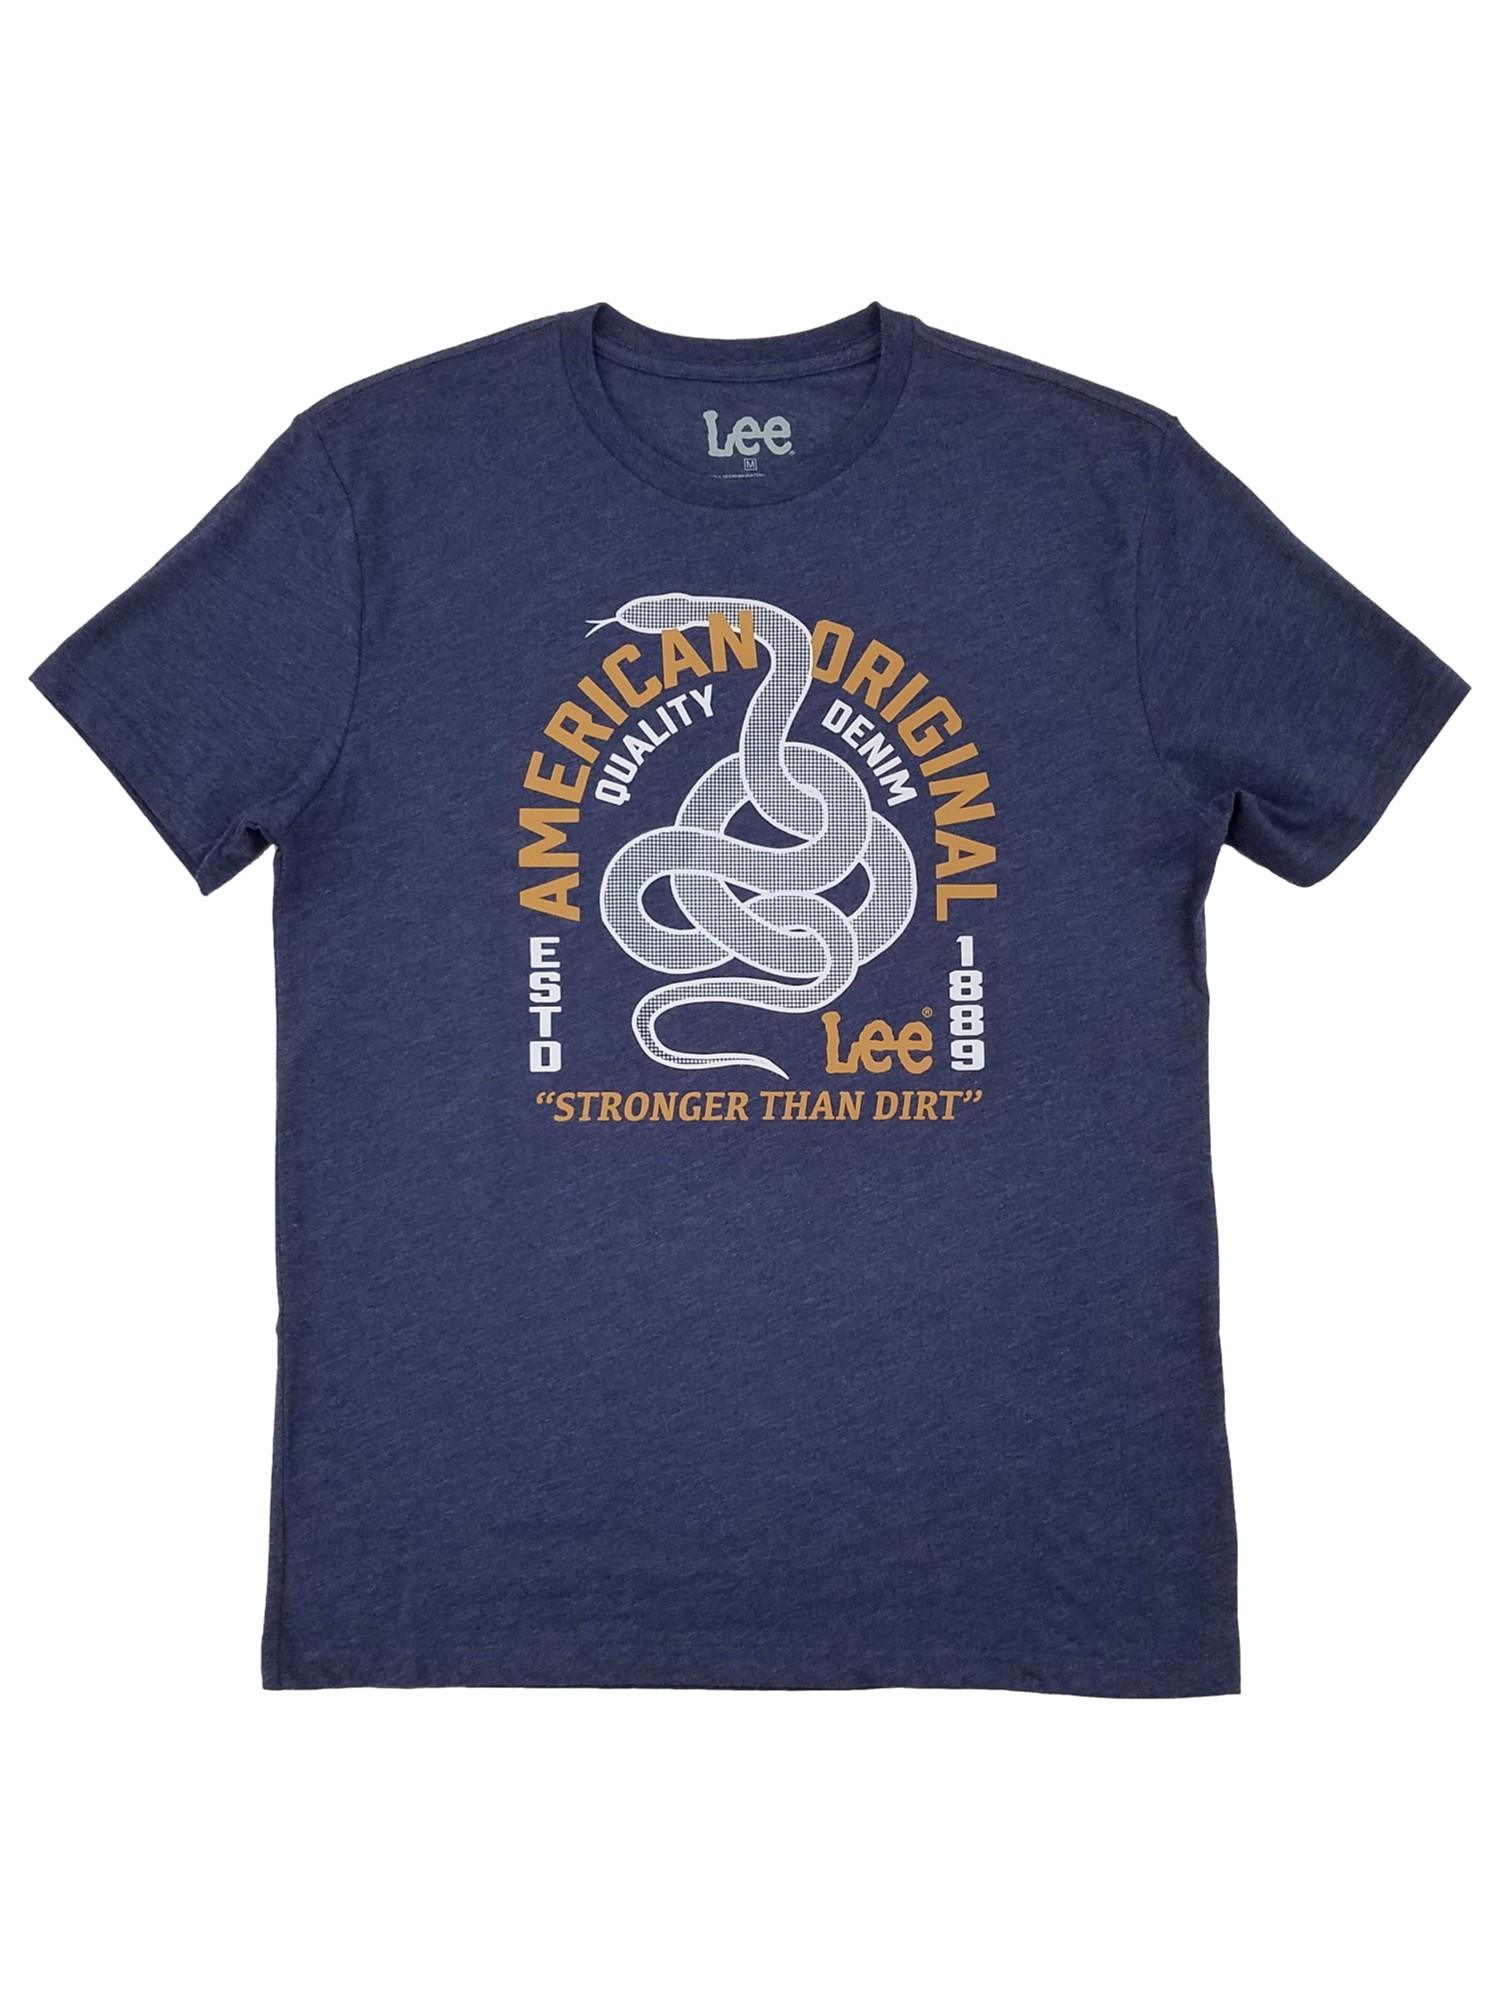 Lee Mens Navy Blue Heather Rattlesnake Graphic Short Sleeve T-Shirt